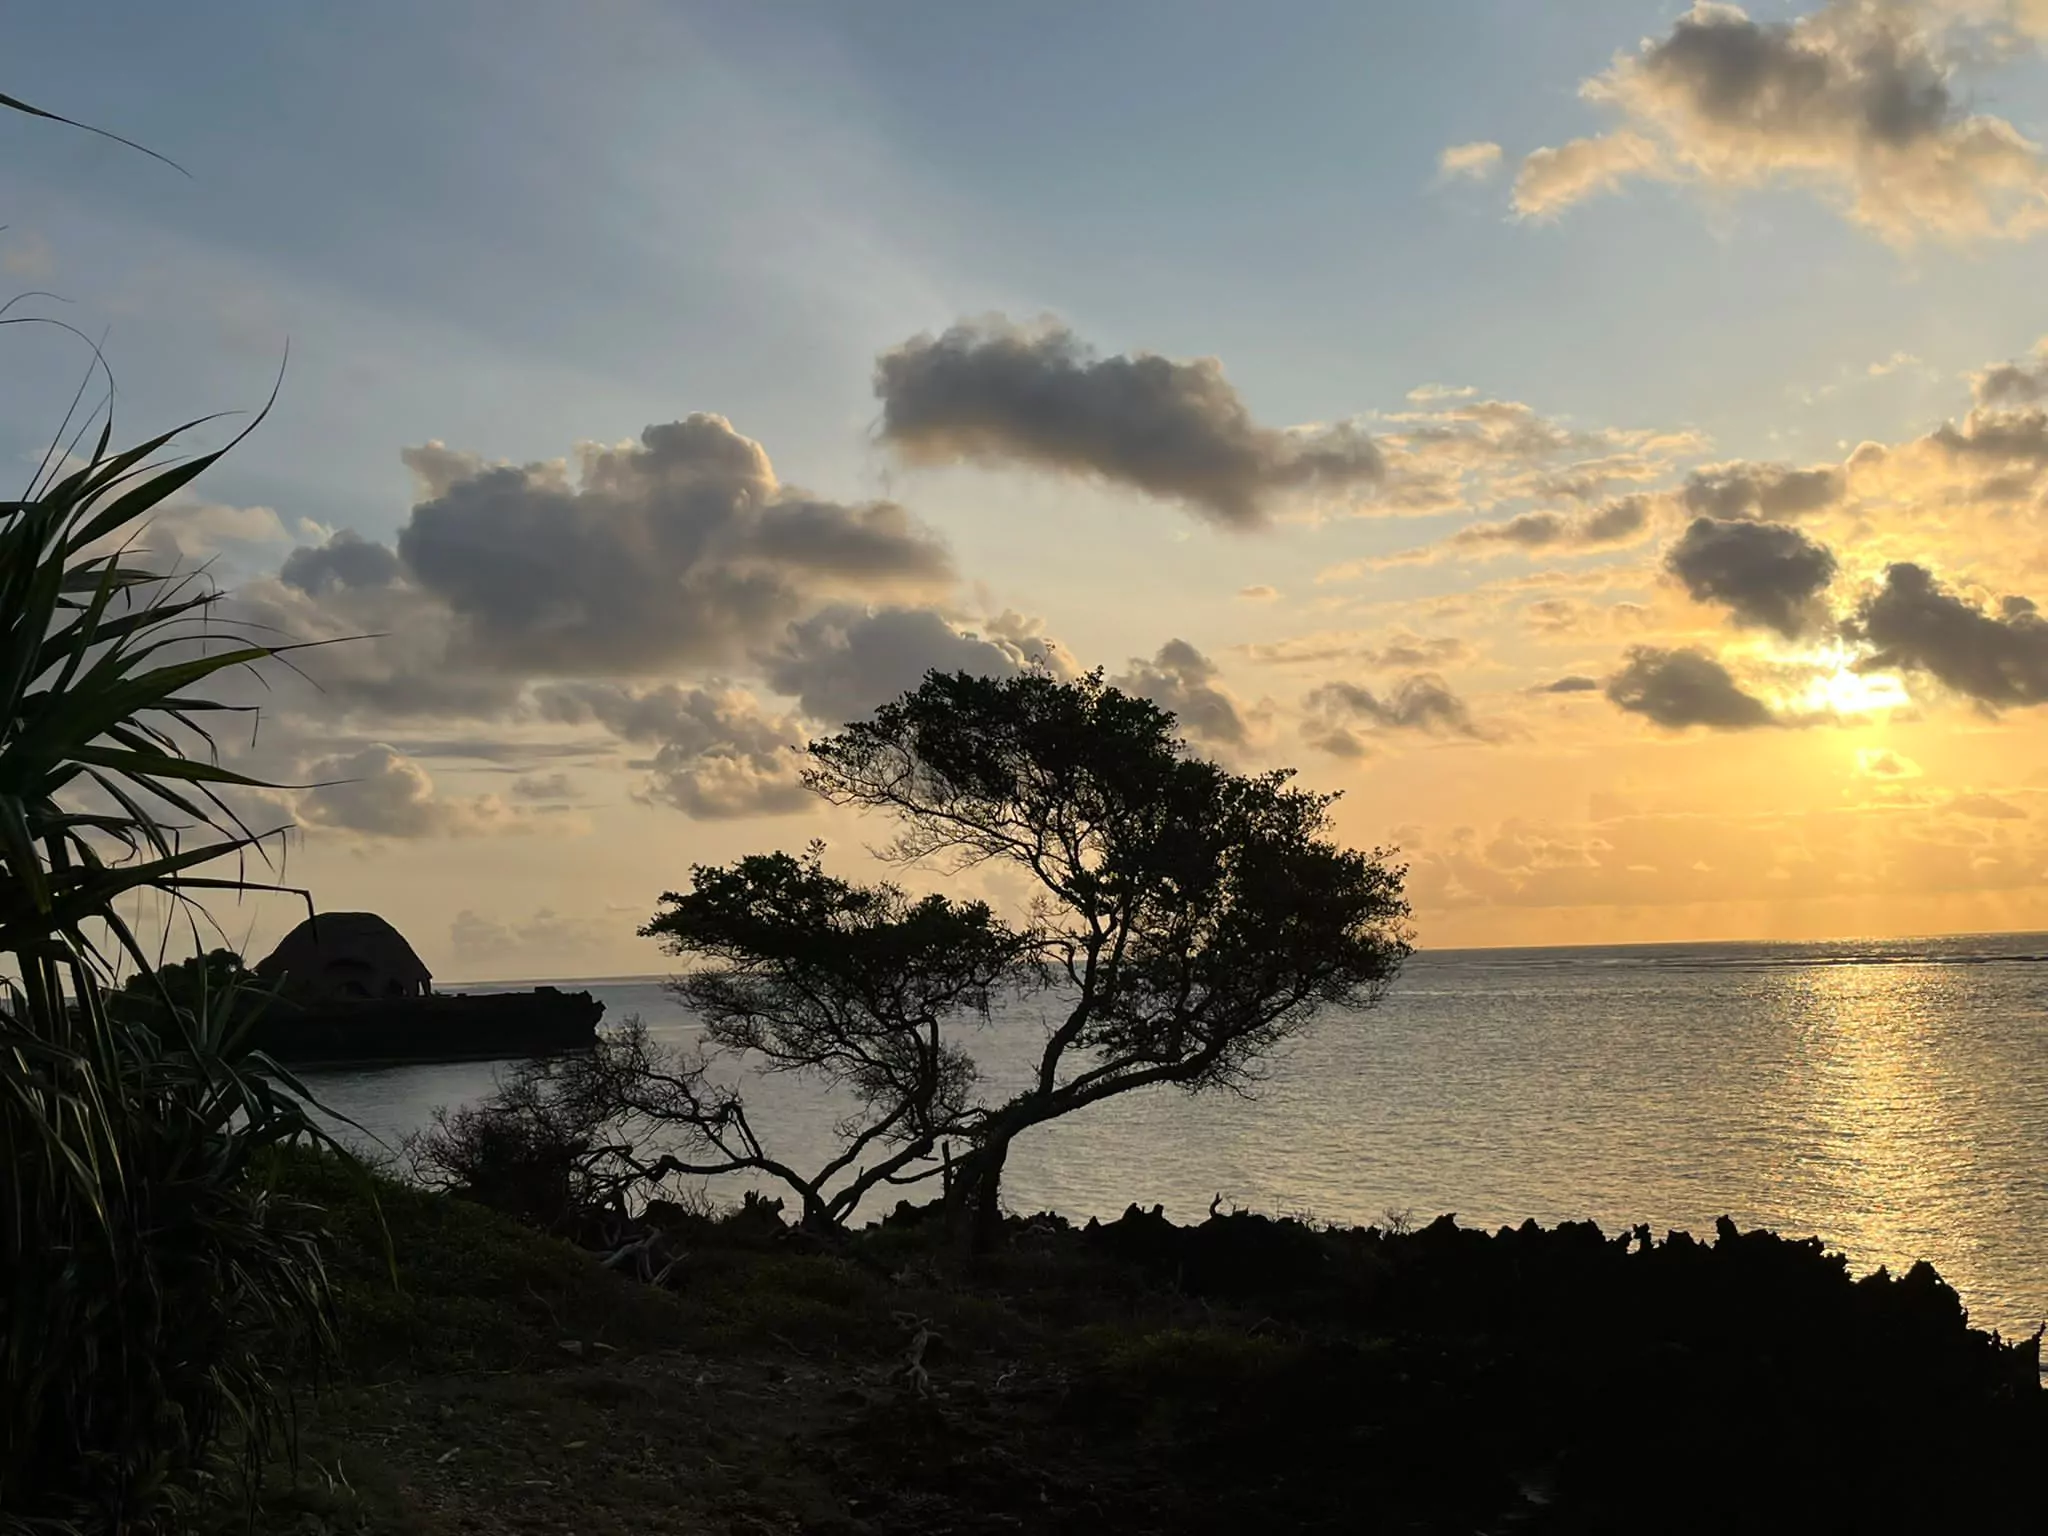 Kenia Hochzeitsreise Chale Island Sonnenuntergang